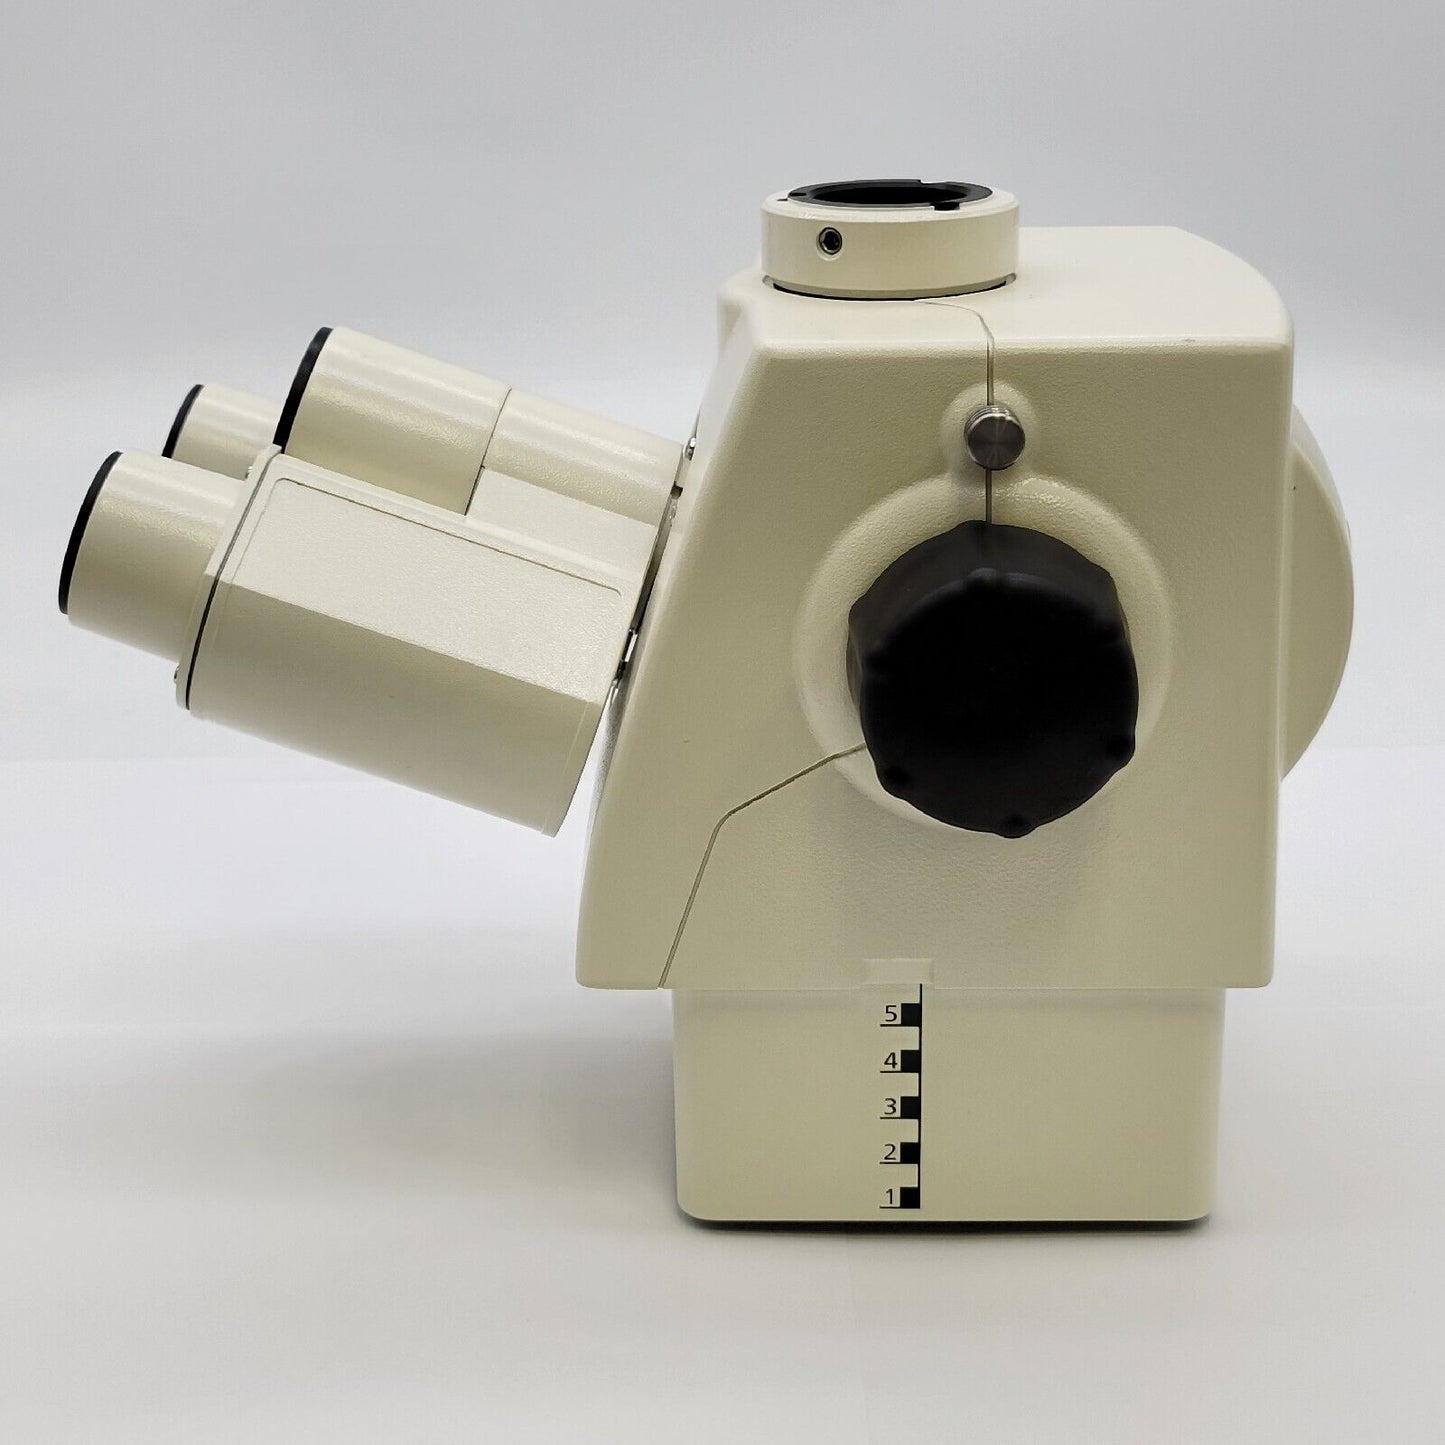 Zeiss Microscope Ergo Trinocular Head Tube with Vertical Adjustment 1104-296 - microscopemarketplace